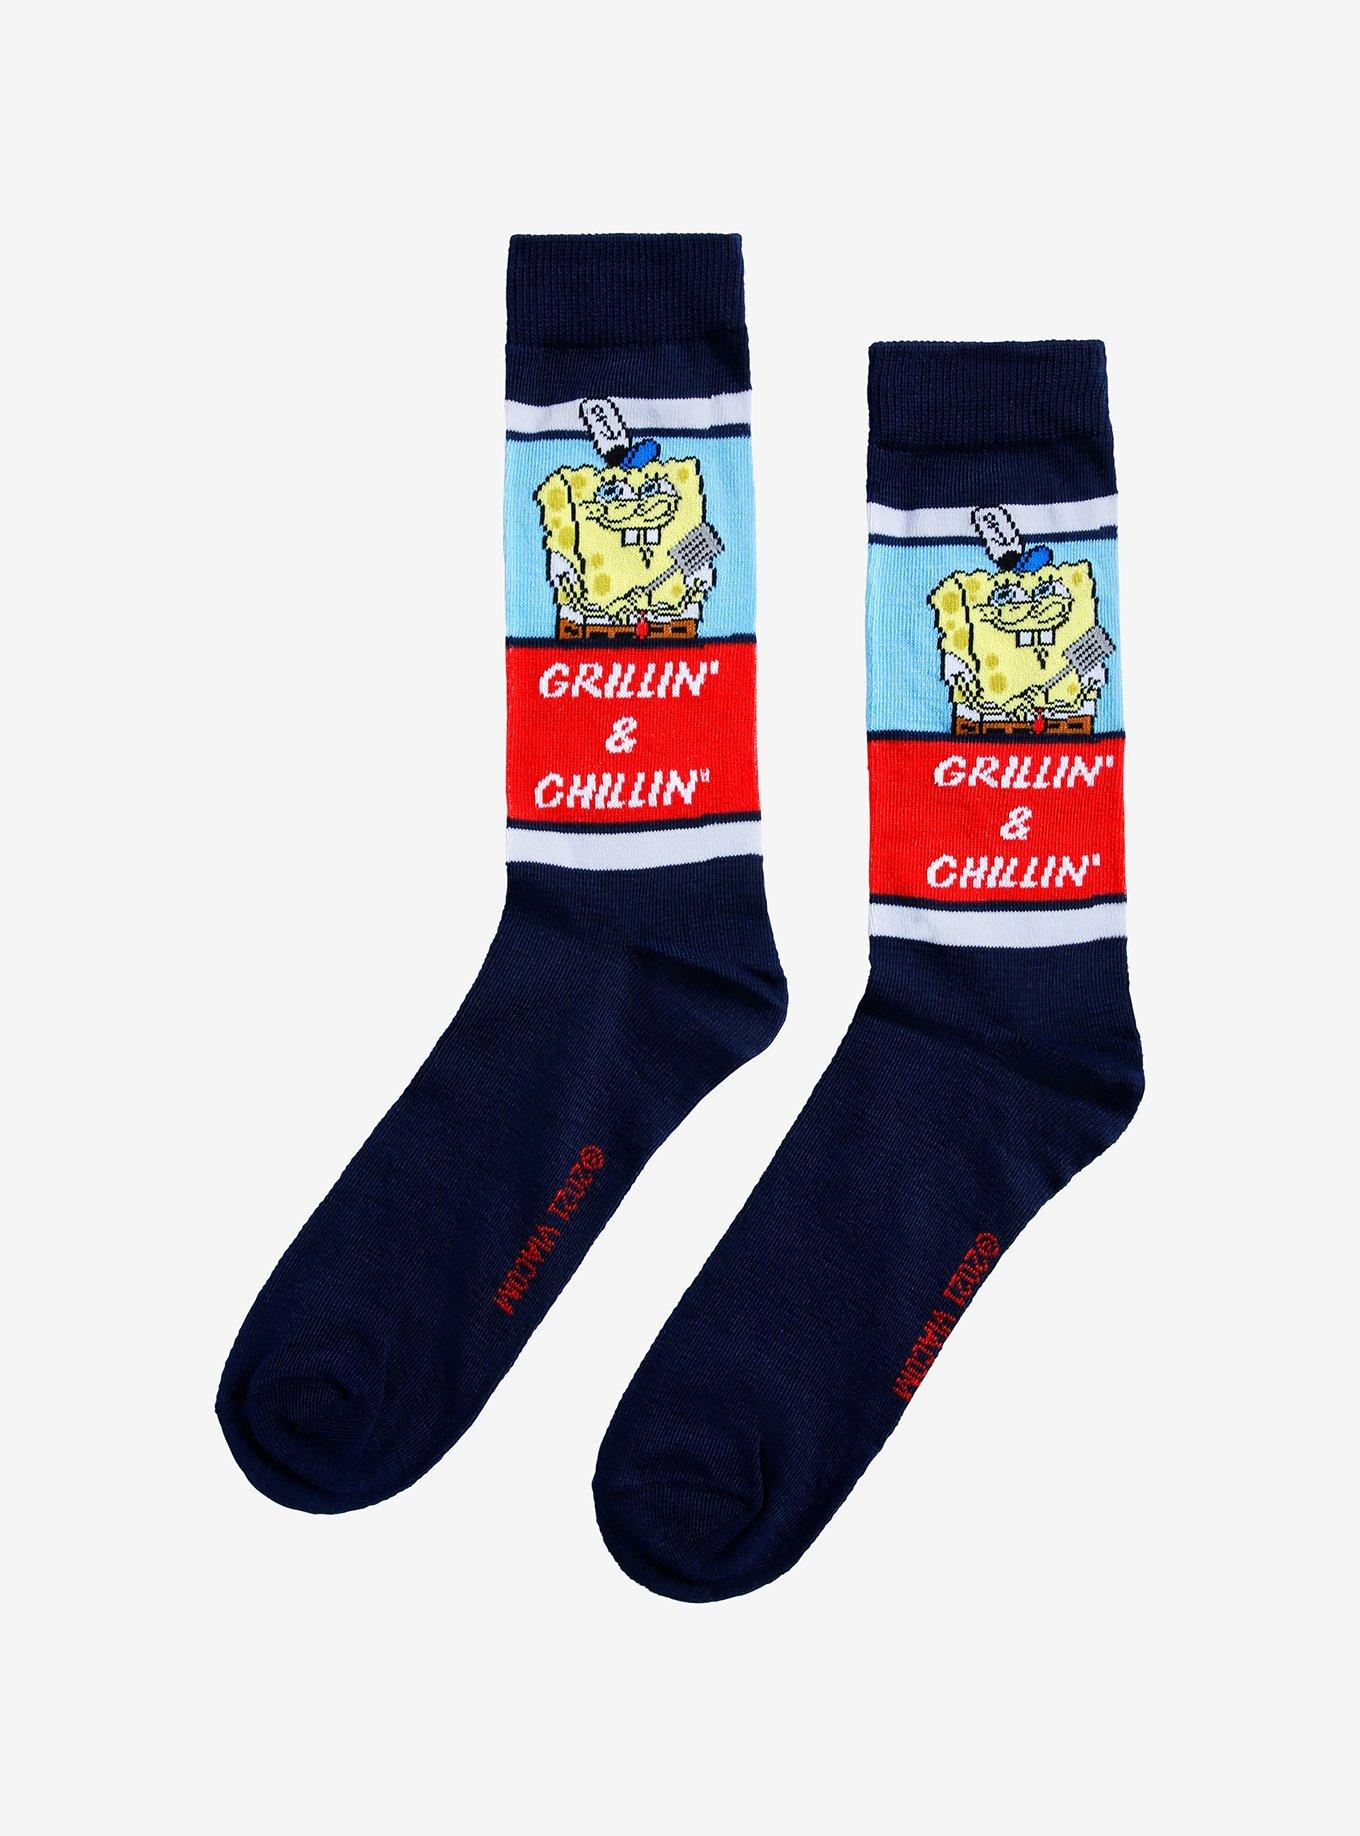 SpongeBob SquarePants Grillin' & Chillin' Crew Socks